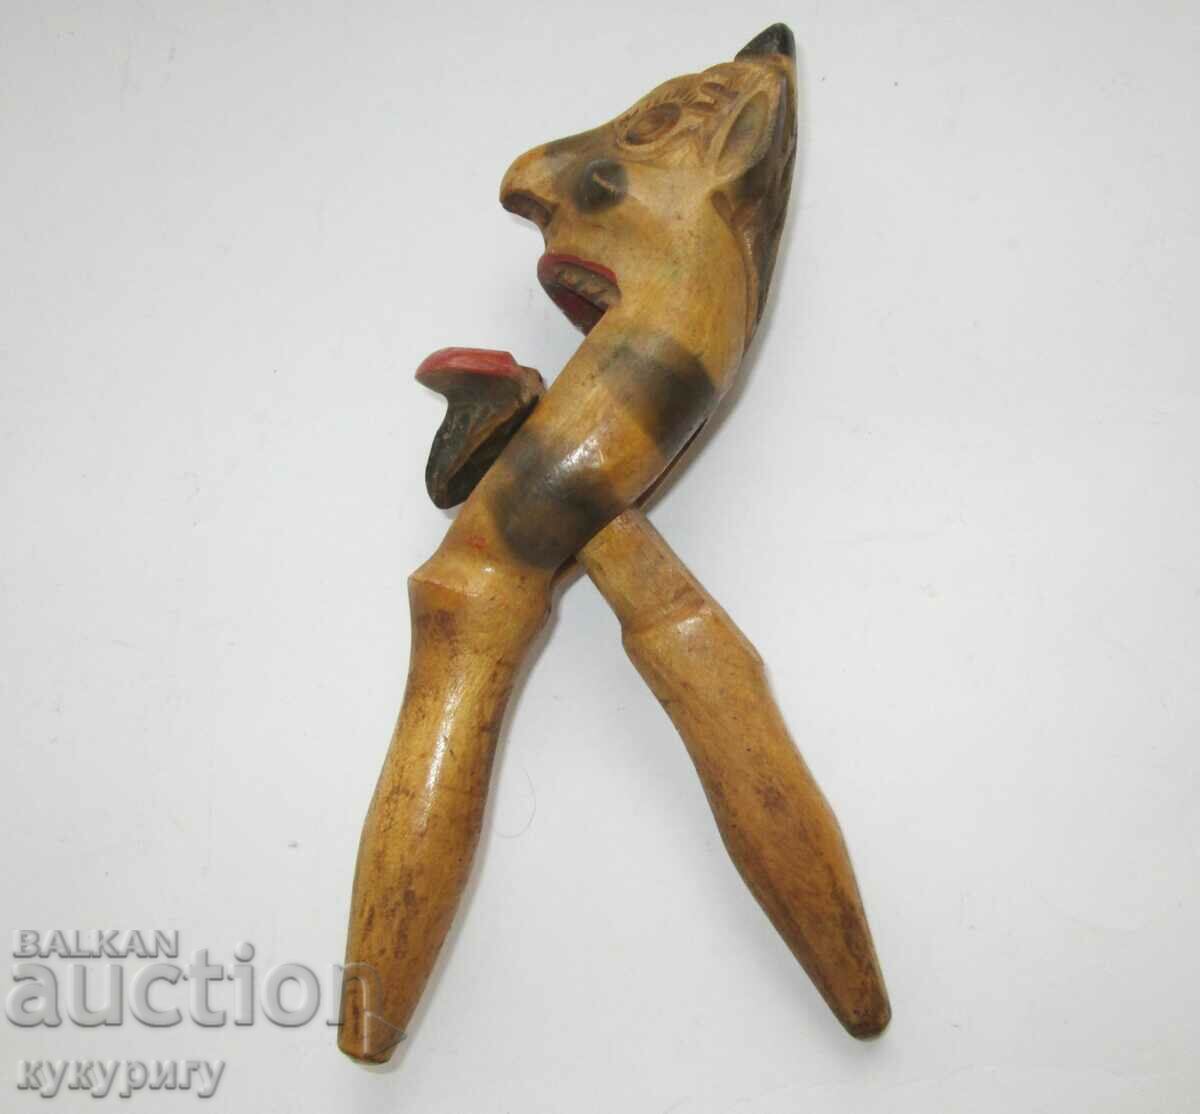 Old ethnic folklore - wooden nutcracker devil figure